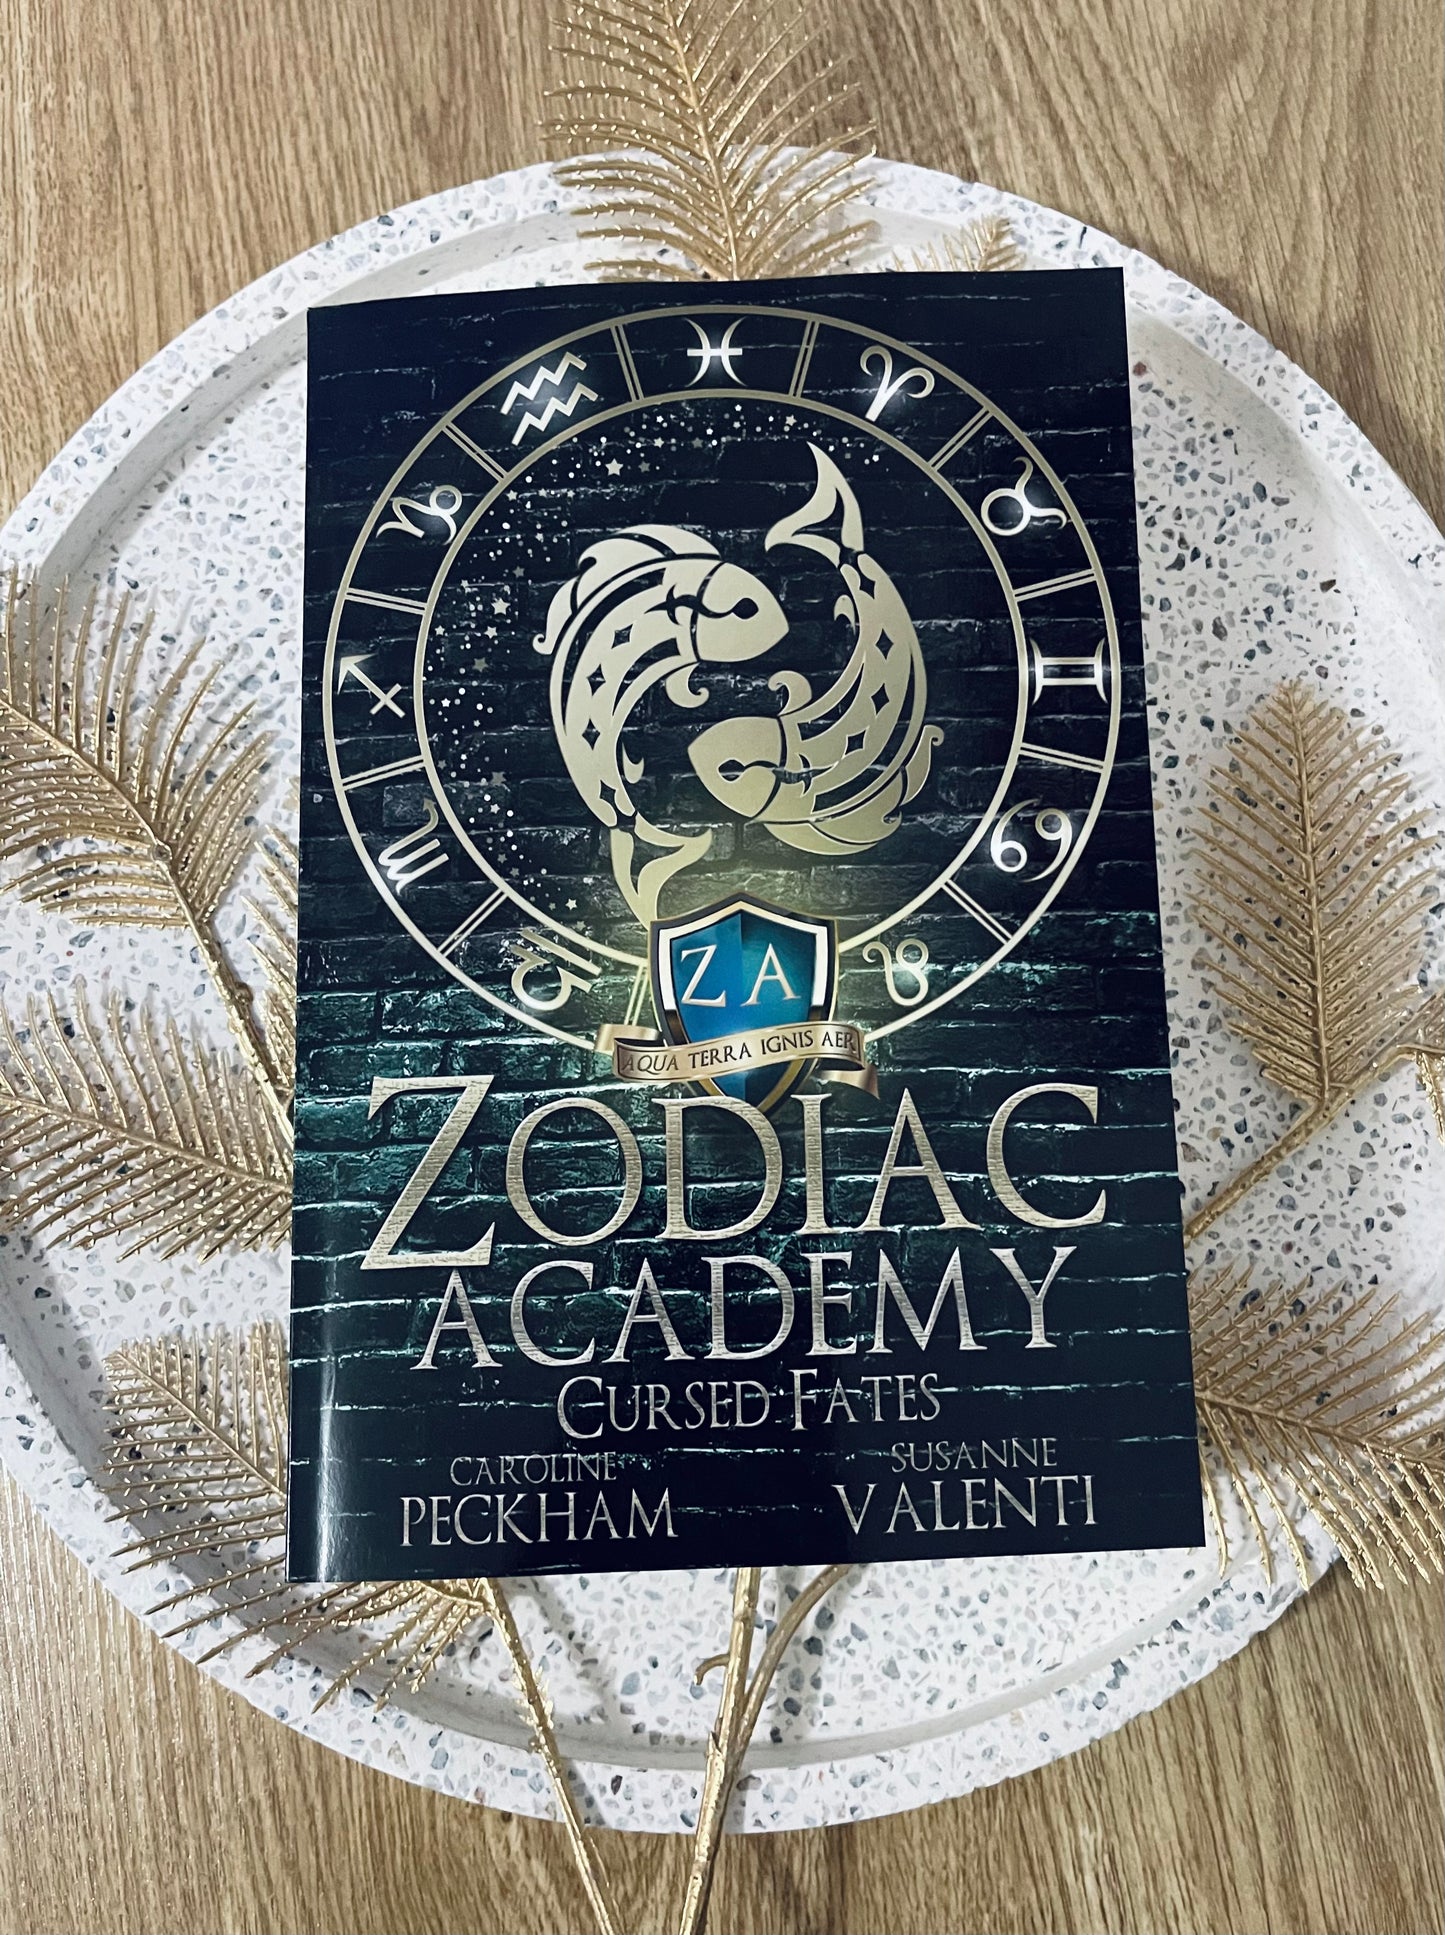 Cursed Fates by Caroline Peckham & Susanne Valenti (Zodiac Academy book 5)